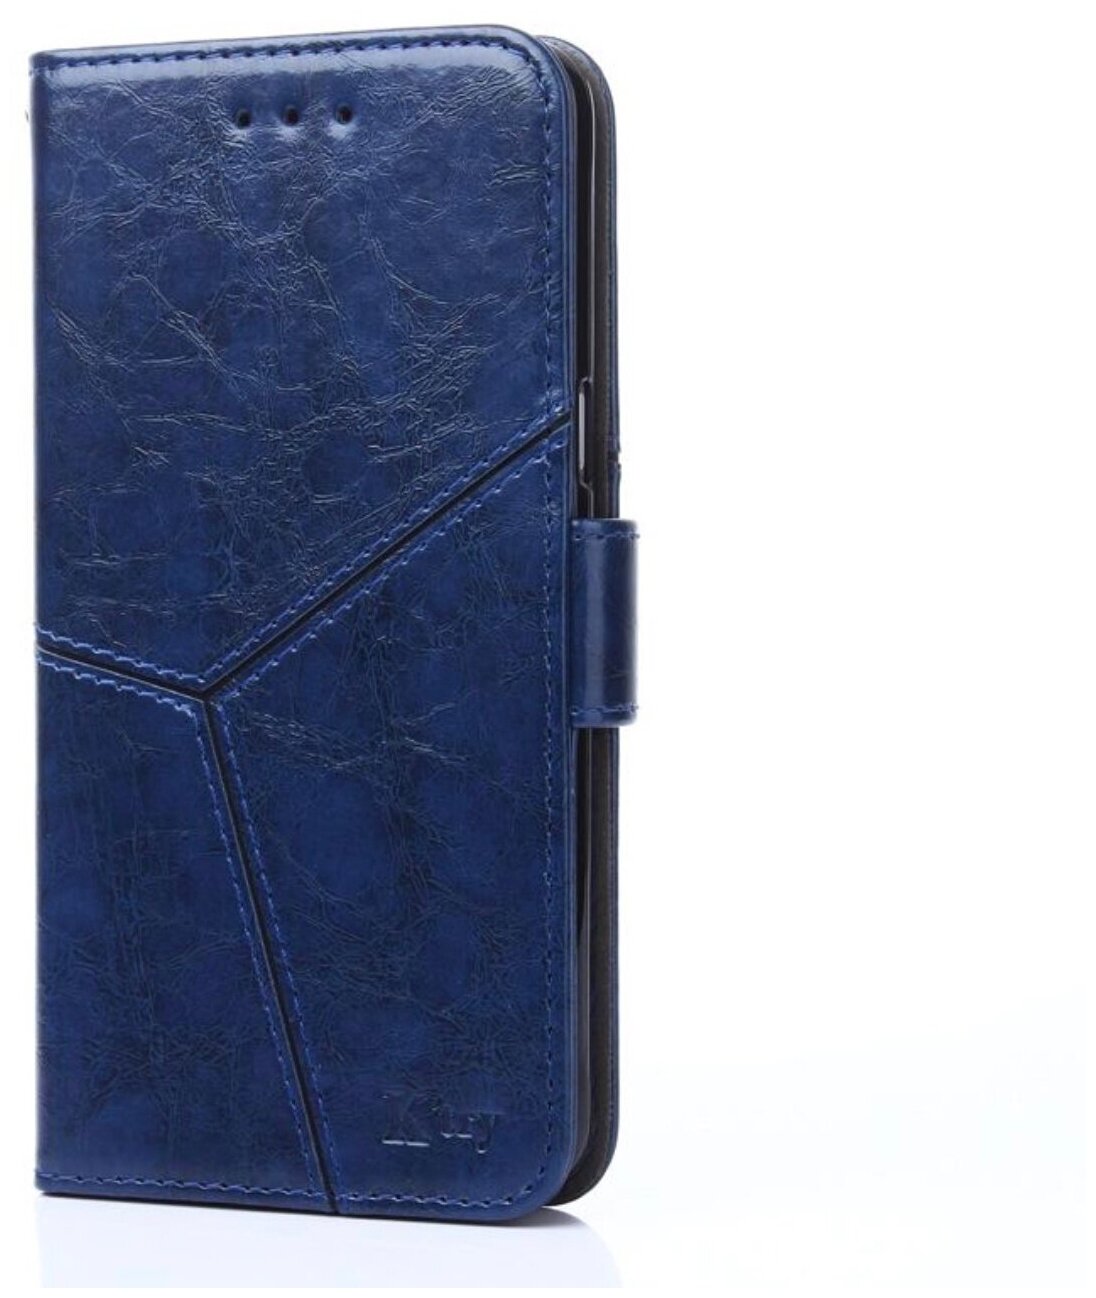 Чехол-книжка Чехол. ру для Sony Xperia XA2 Dual 5.2 (H4113) прошитый по контуру с необычным геометрическим швом синий